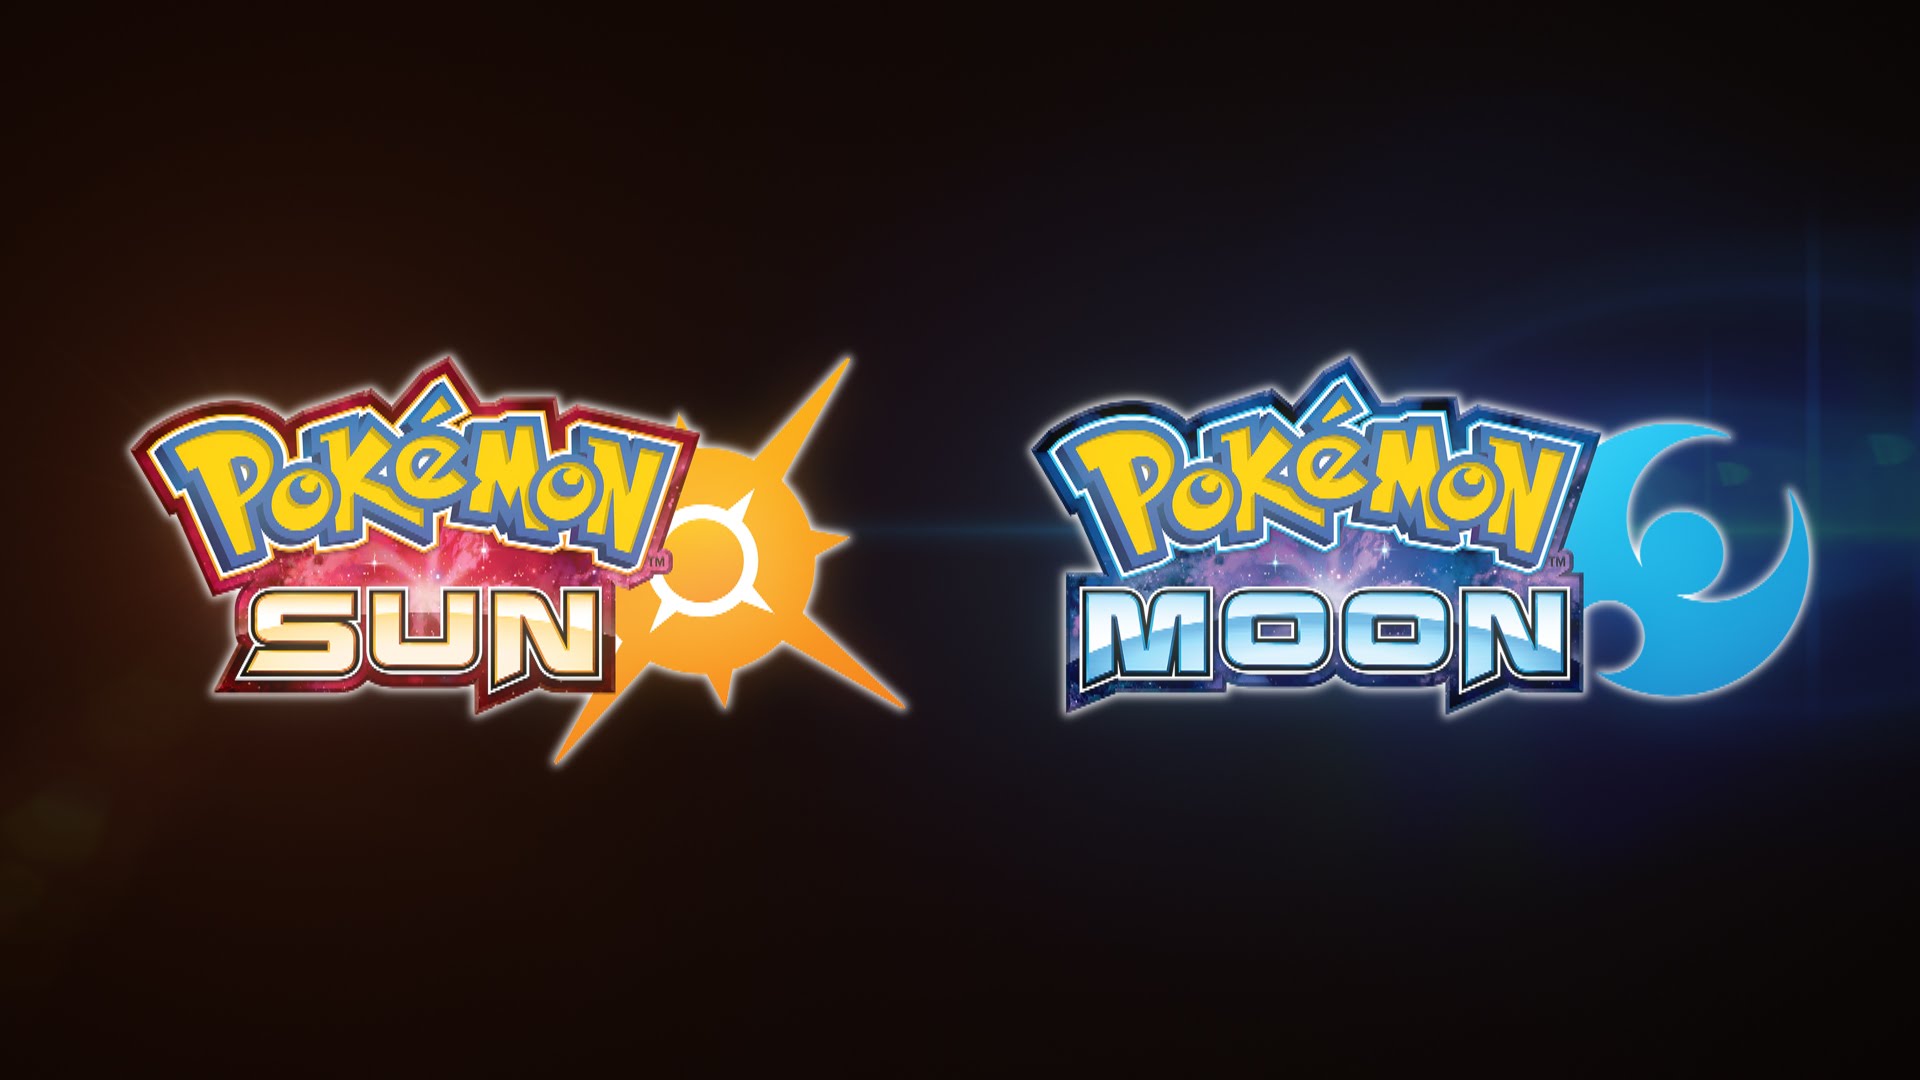 pokemon-sun-and-moon-7-www-culturageek-com-ar